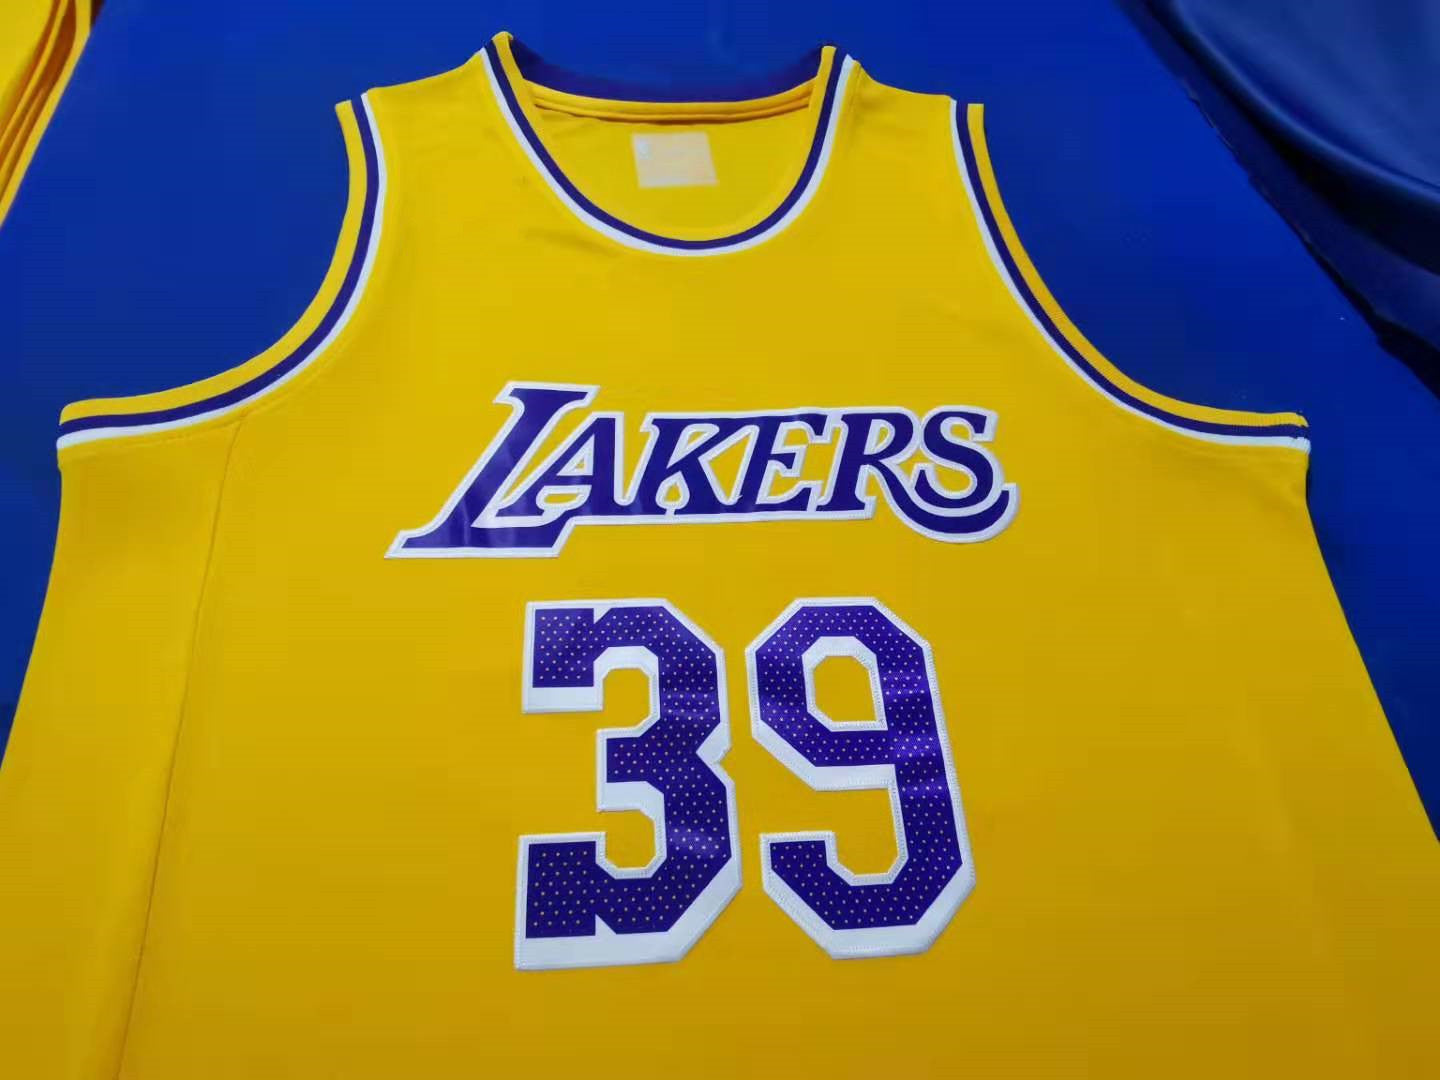 Dwight Howard #39 NBA-Trikot der Los Angeles Lakers in Gelb für Herren